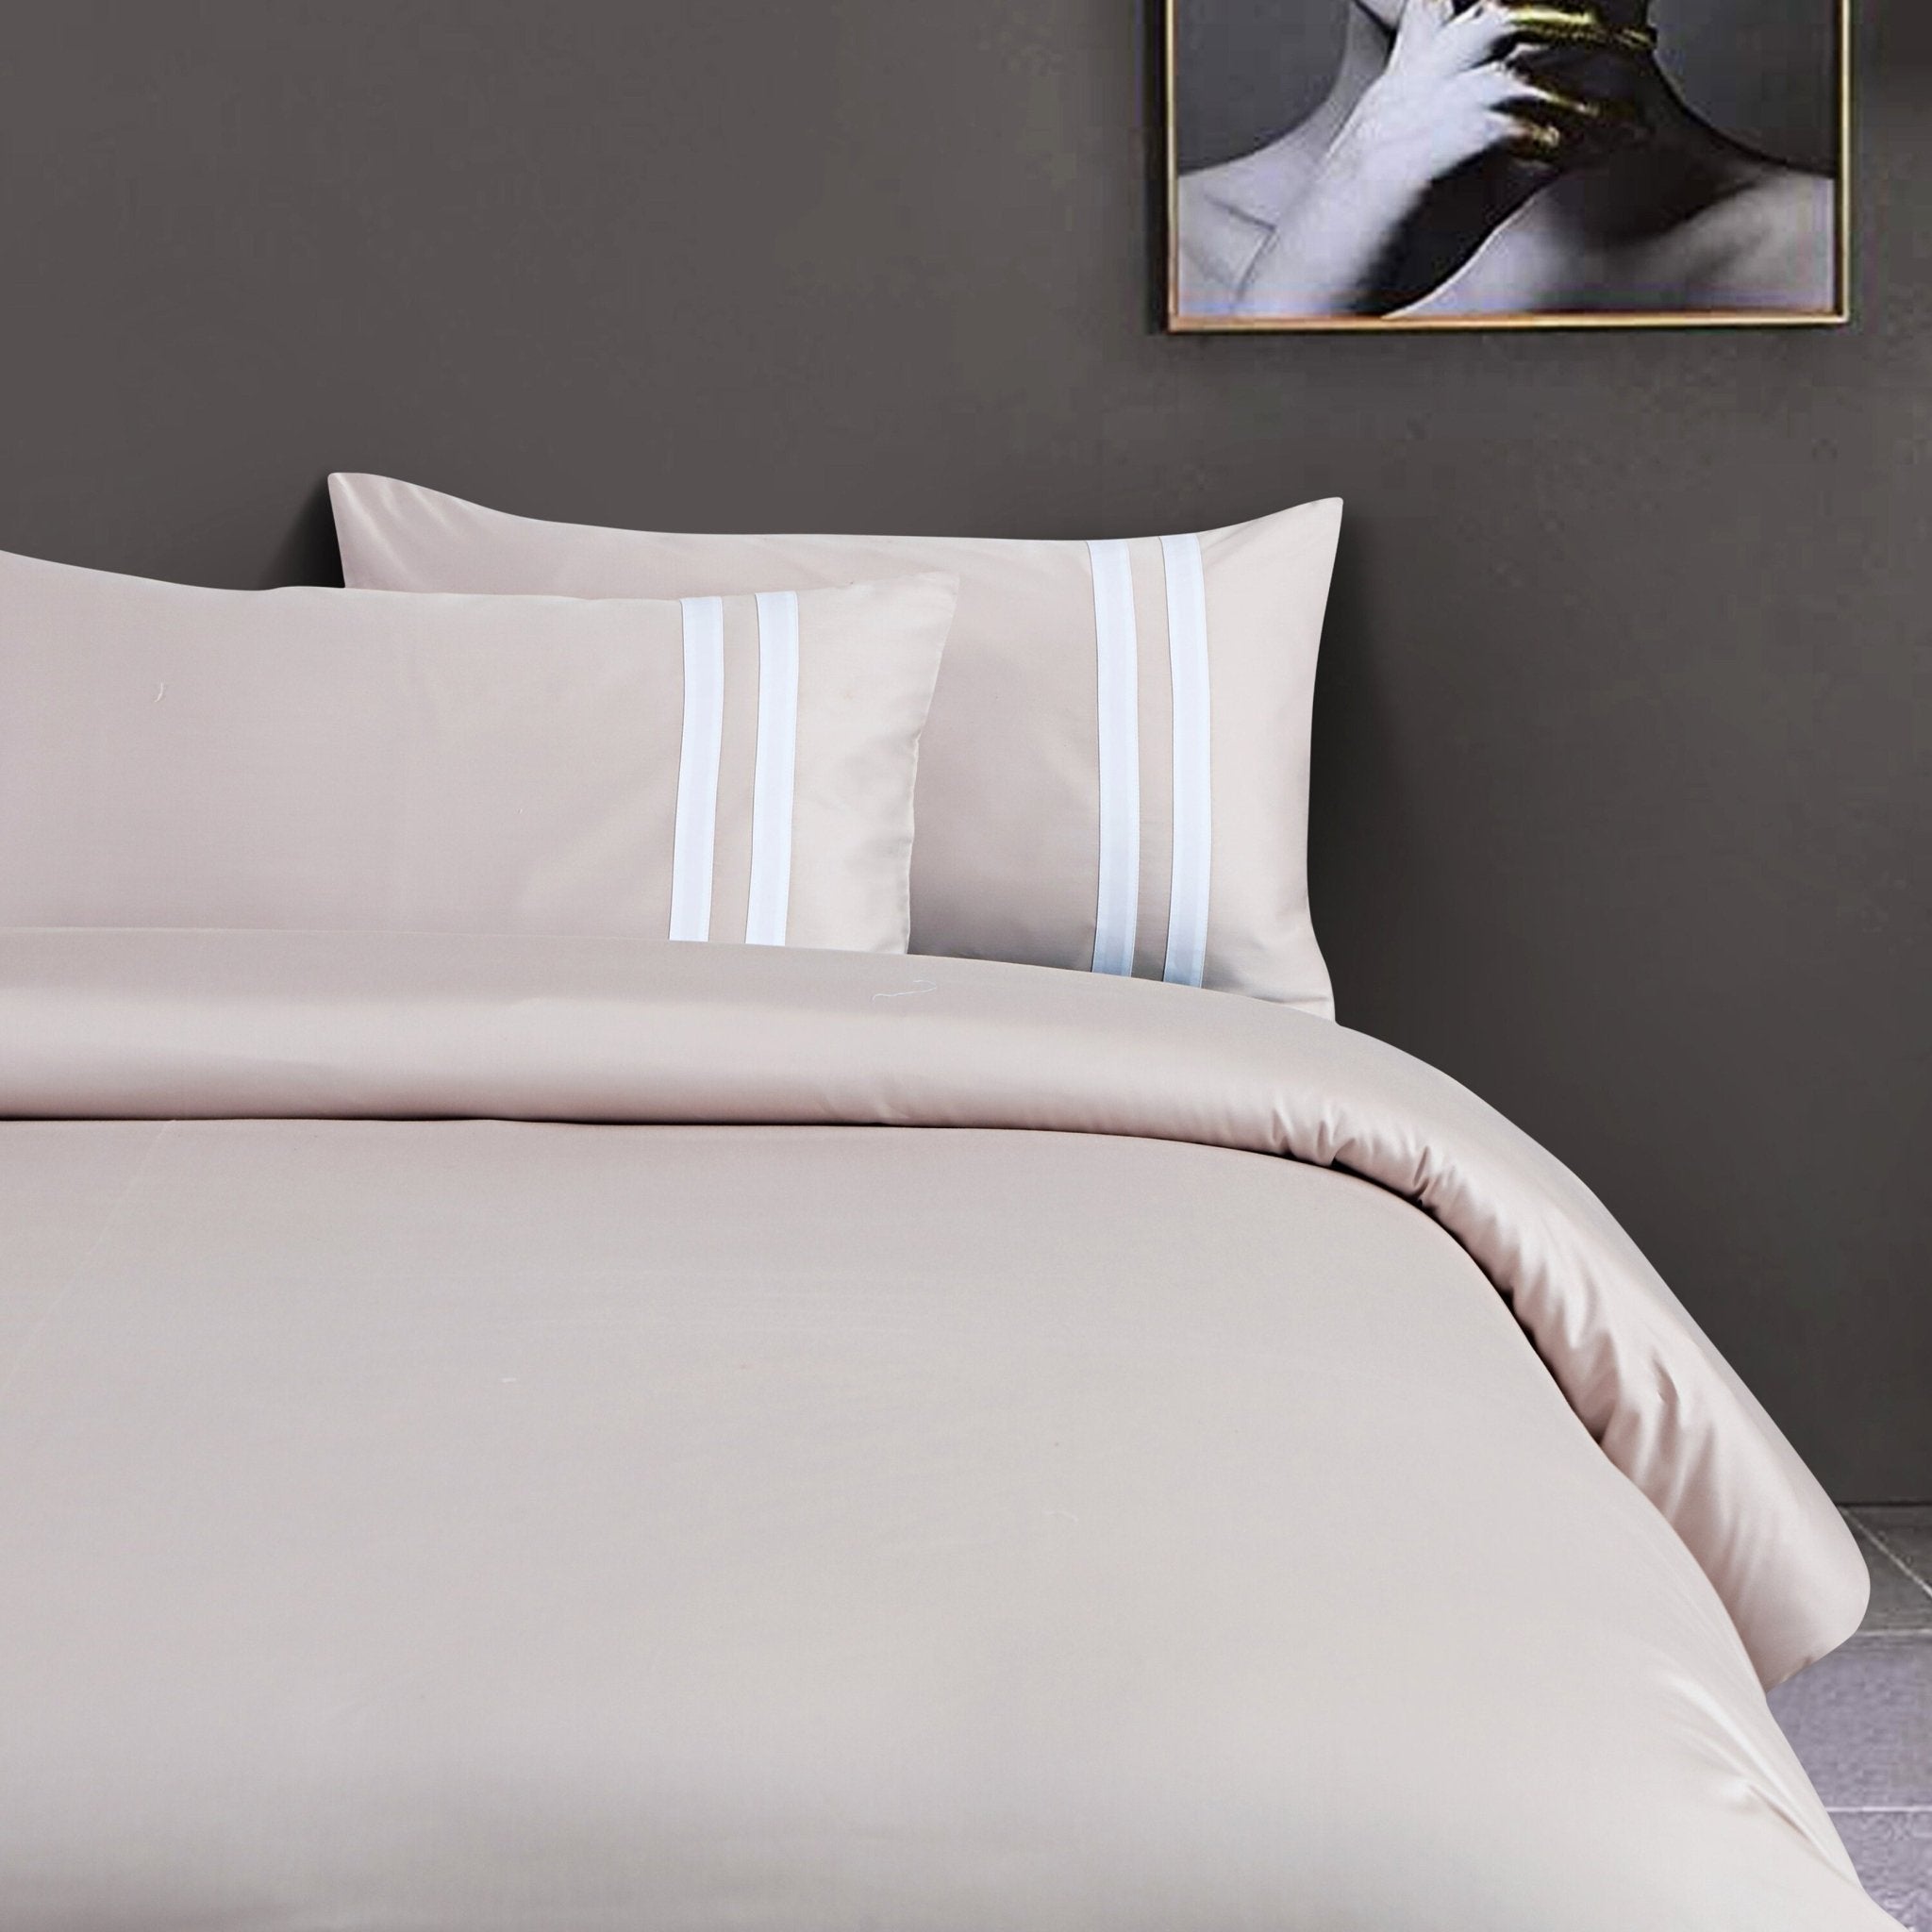 Malako Luxe 550TC 100% Cotton Almond Beige King Size Plain Bedsheet with 2 Striped Pillow Cases - MALAKO